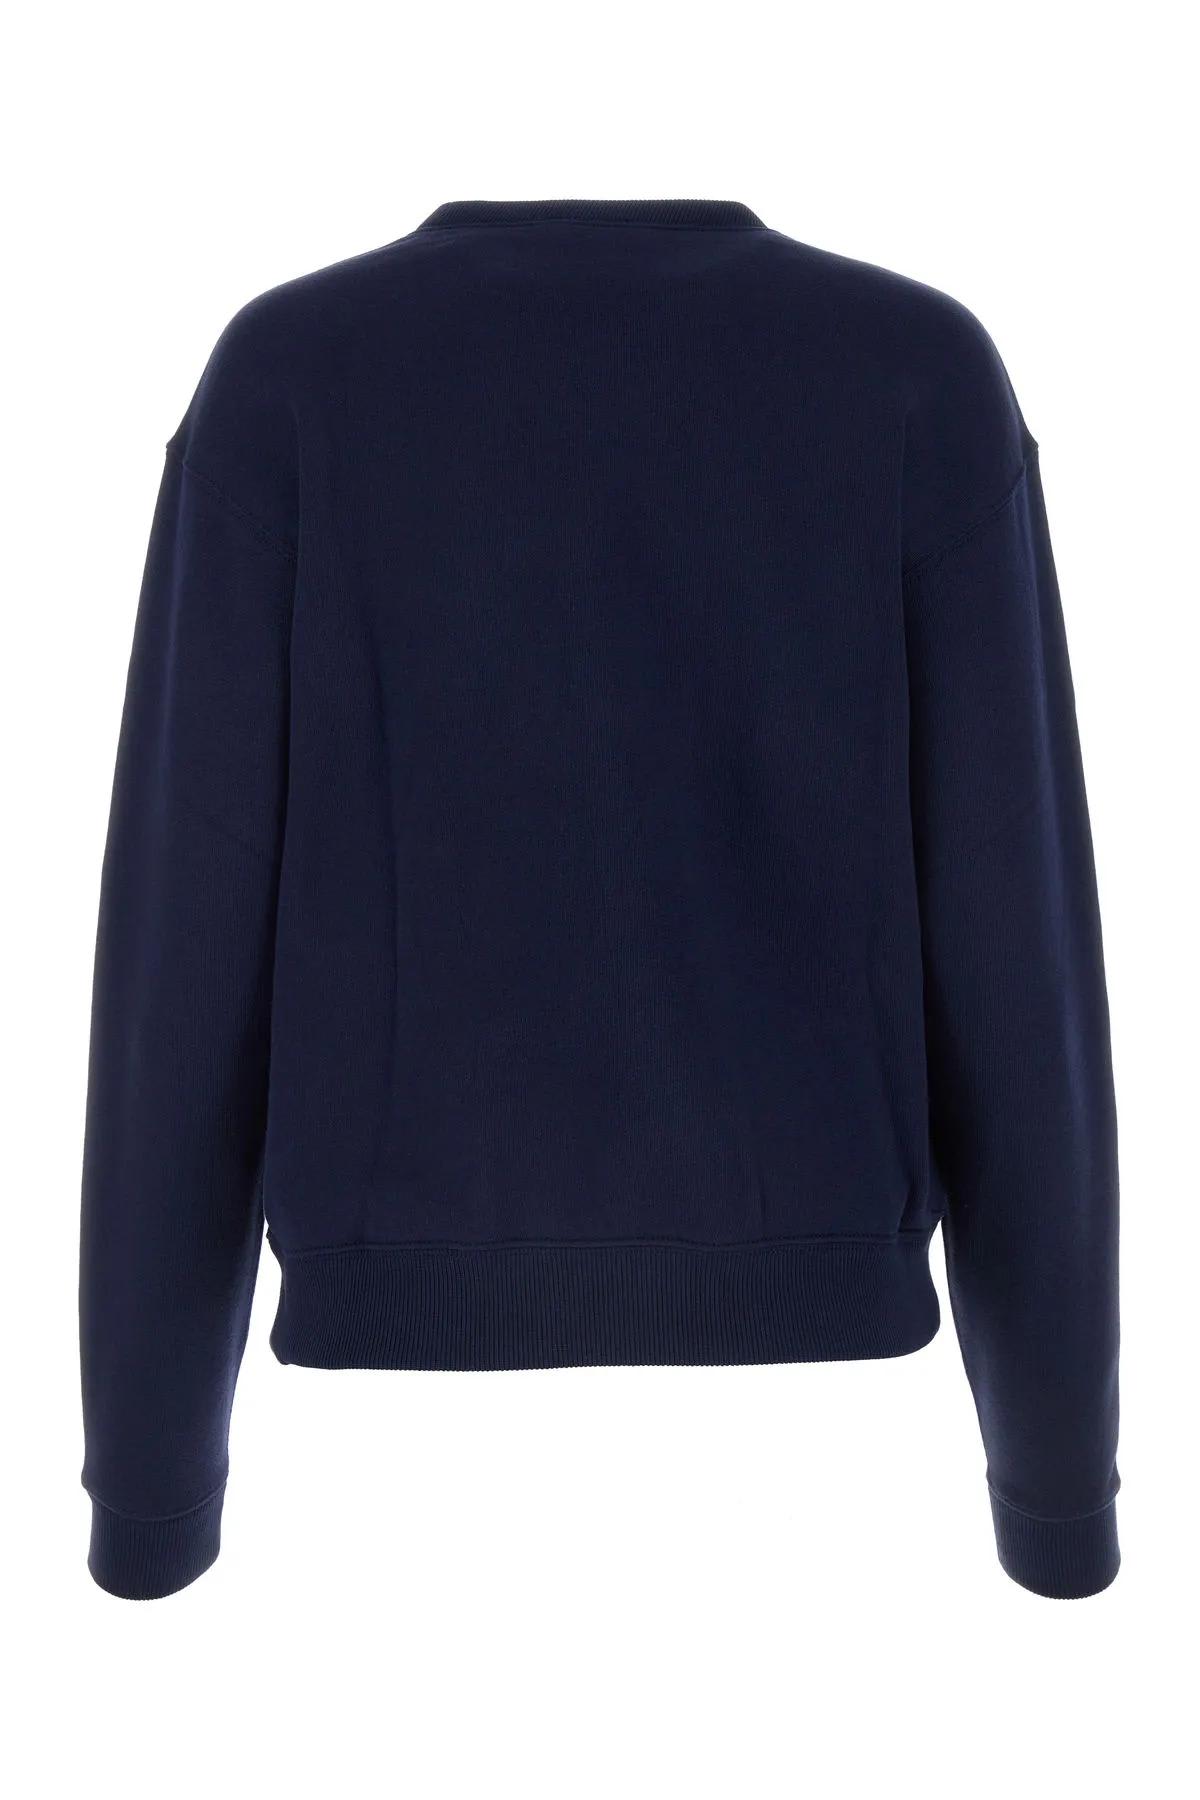 Shop Polo Ralph Lauren Navy Blue Cotton Blend Sweatshirt